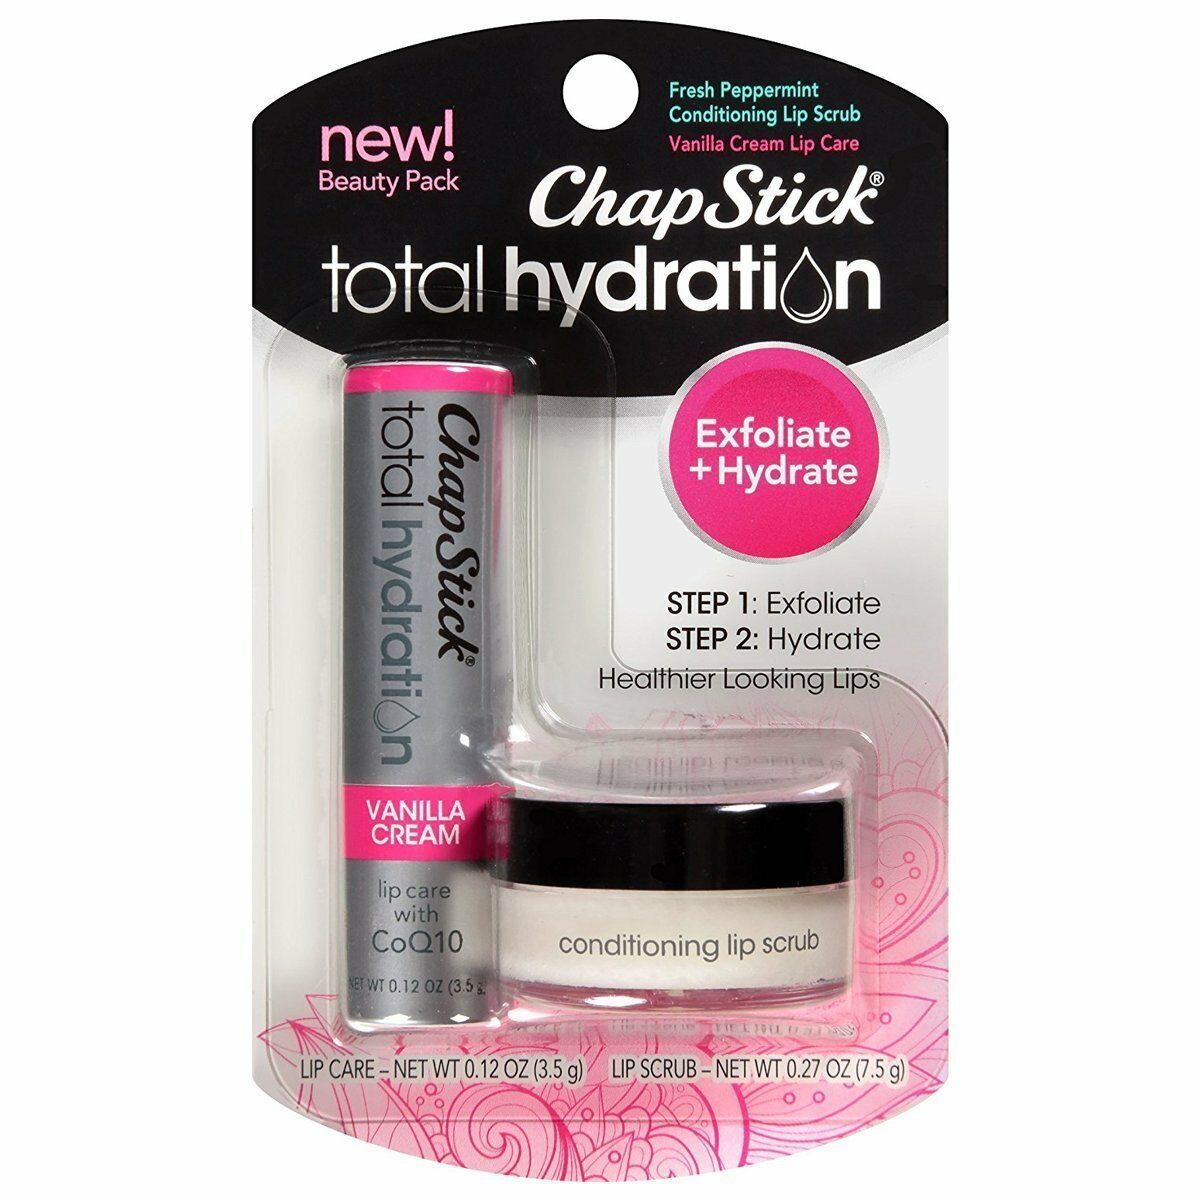 317845 Total Hydration Conditioning Lip Scrub, Vanilla Creme Beauty Pack